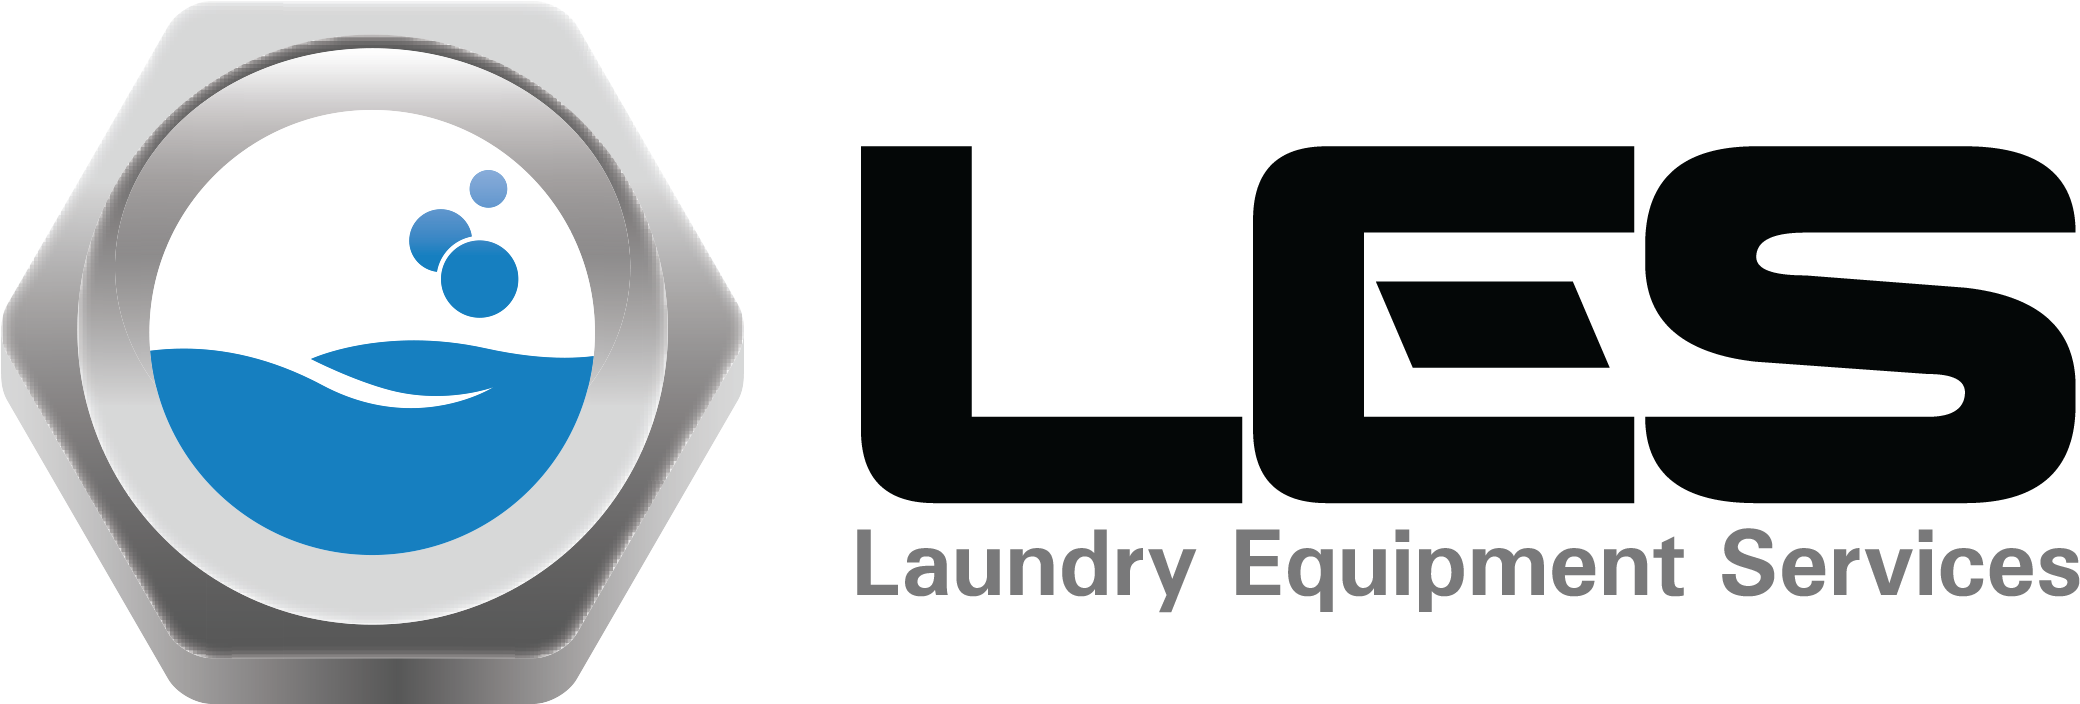 800 866 - Laundry (2142x758)